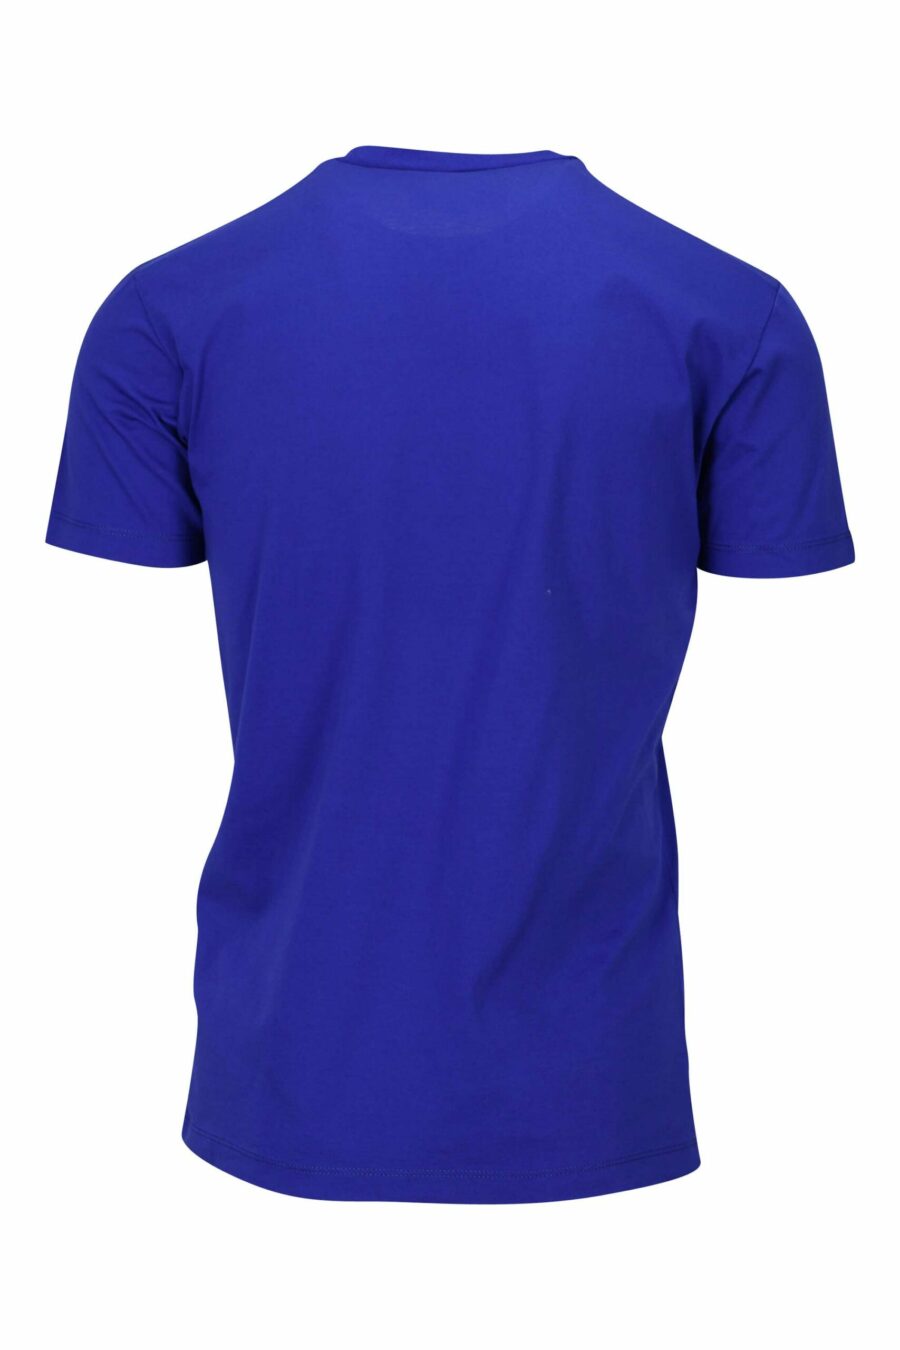 Dunkelblaues T-Shirt mit Minilogue "Ikone" - 8054148021160 1 skaliert